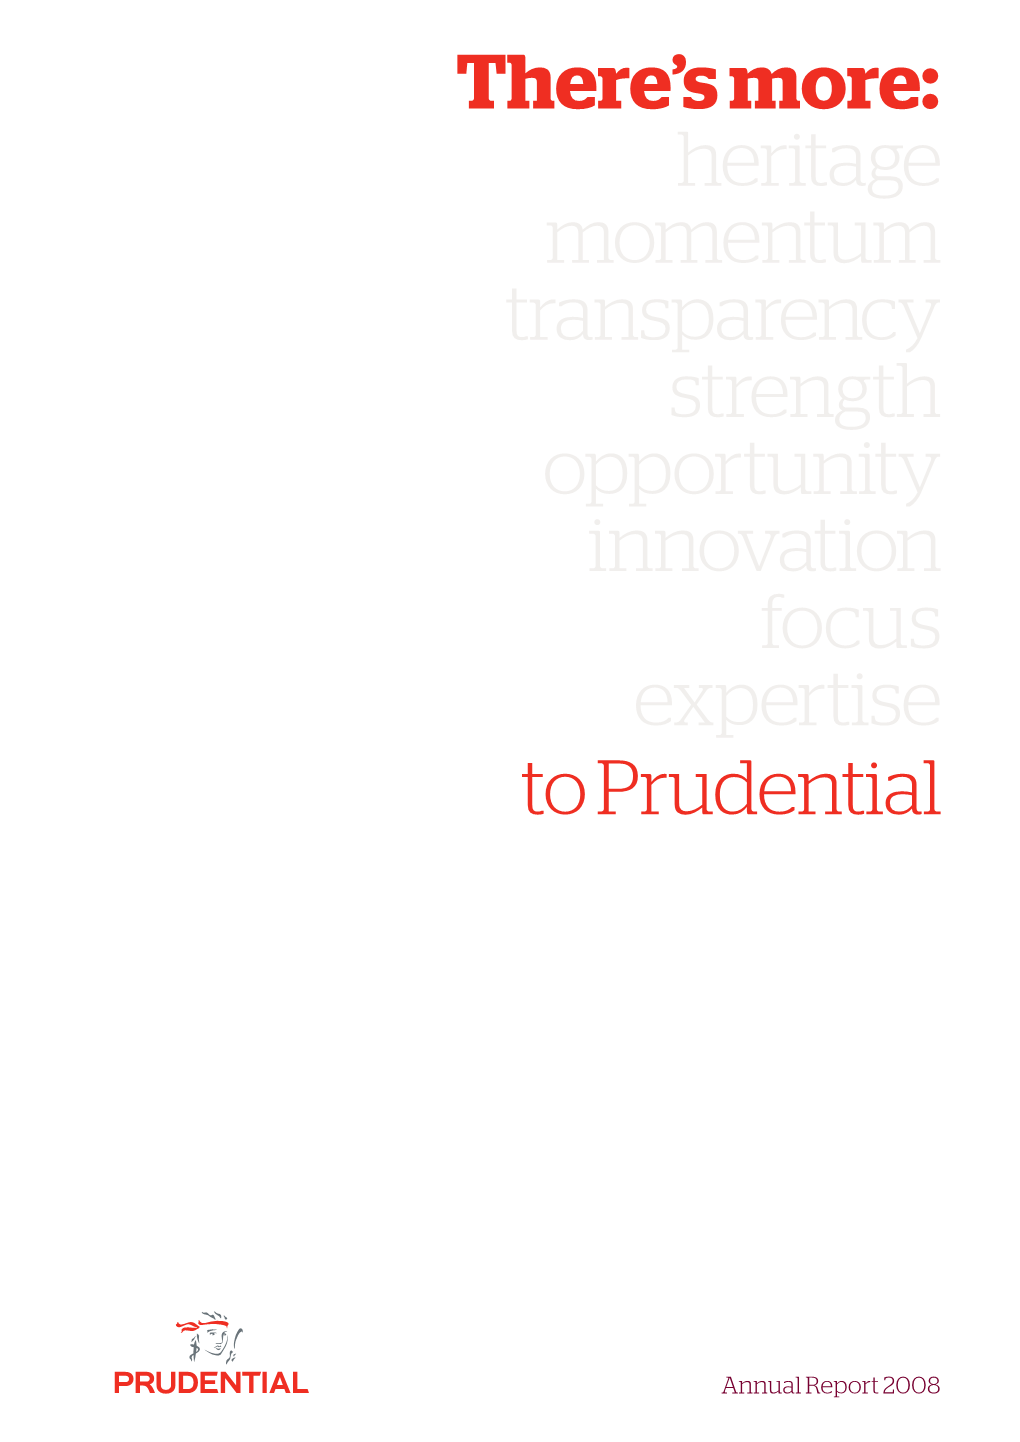 Prudential Annual Report 2008